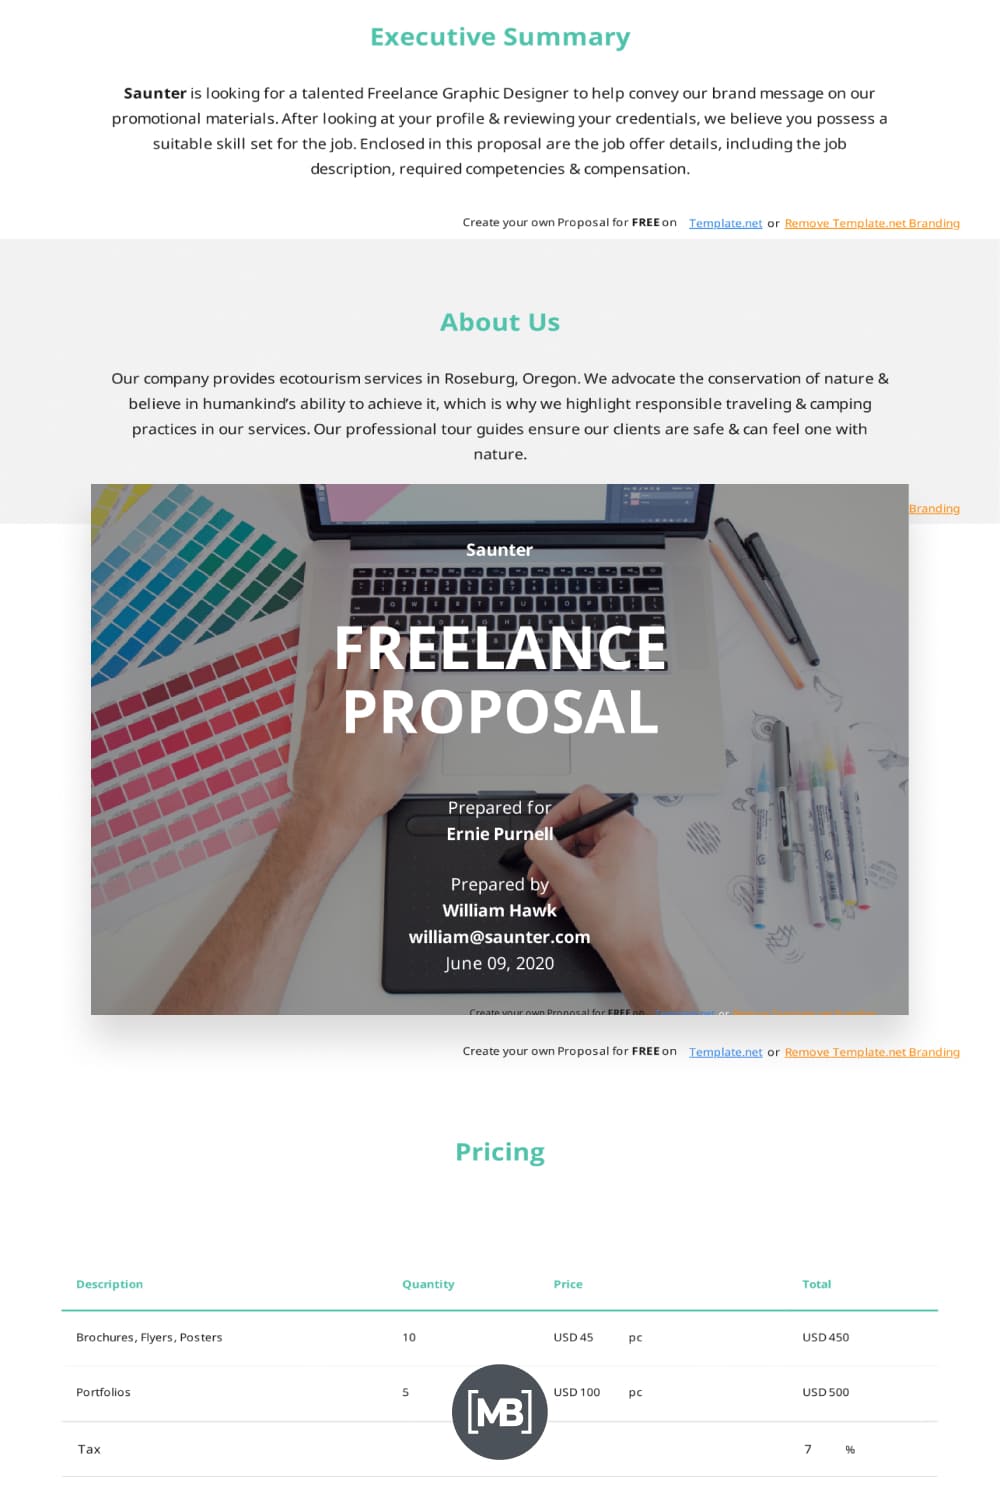 Basic freelance proposal template.